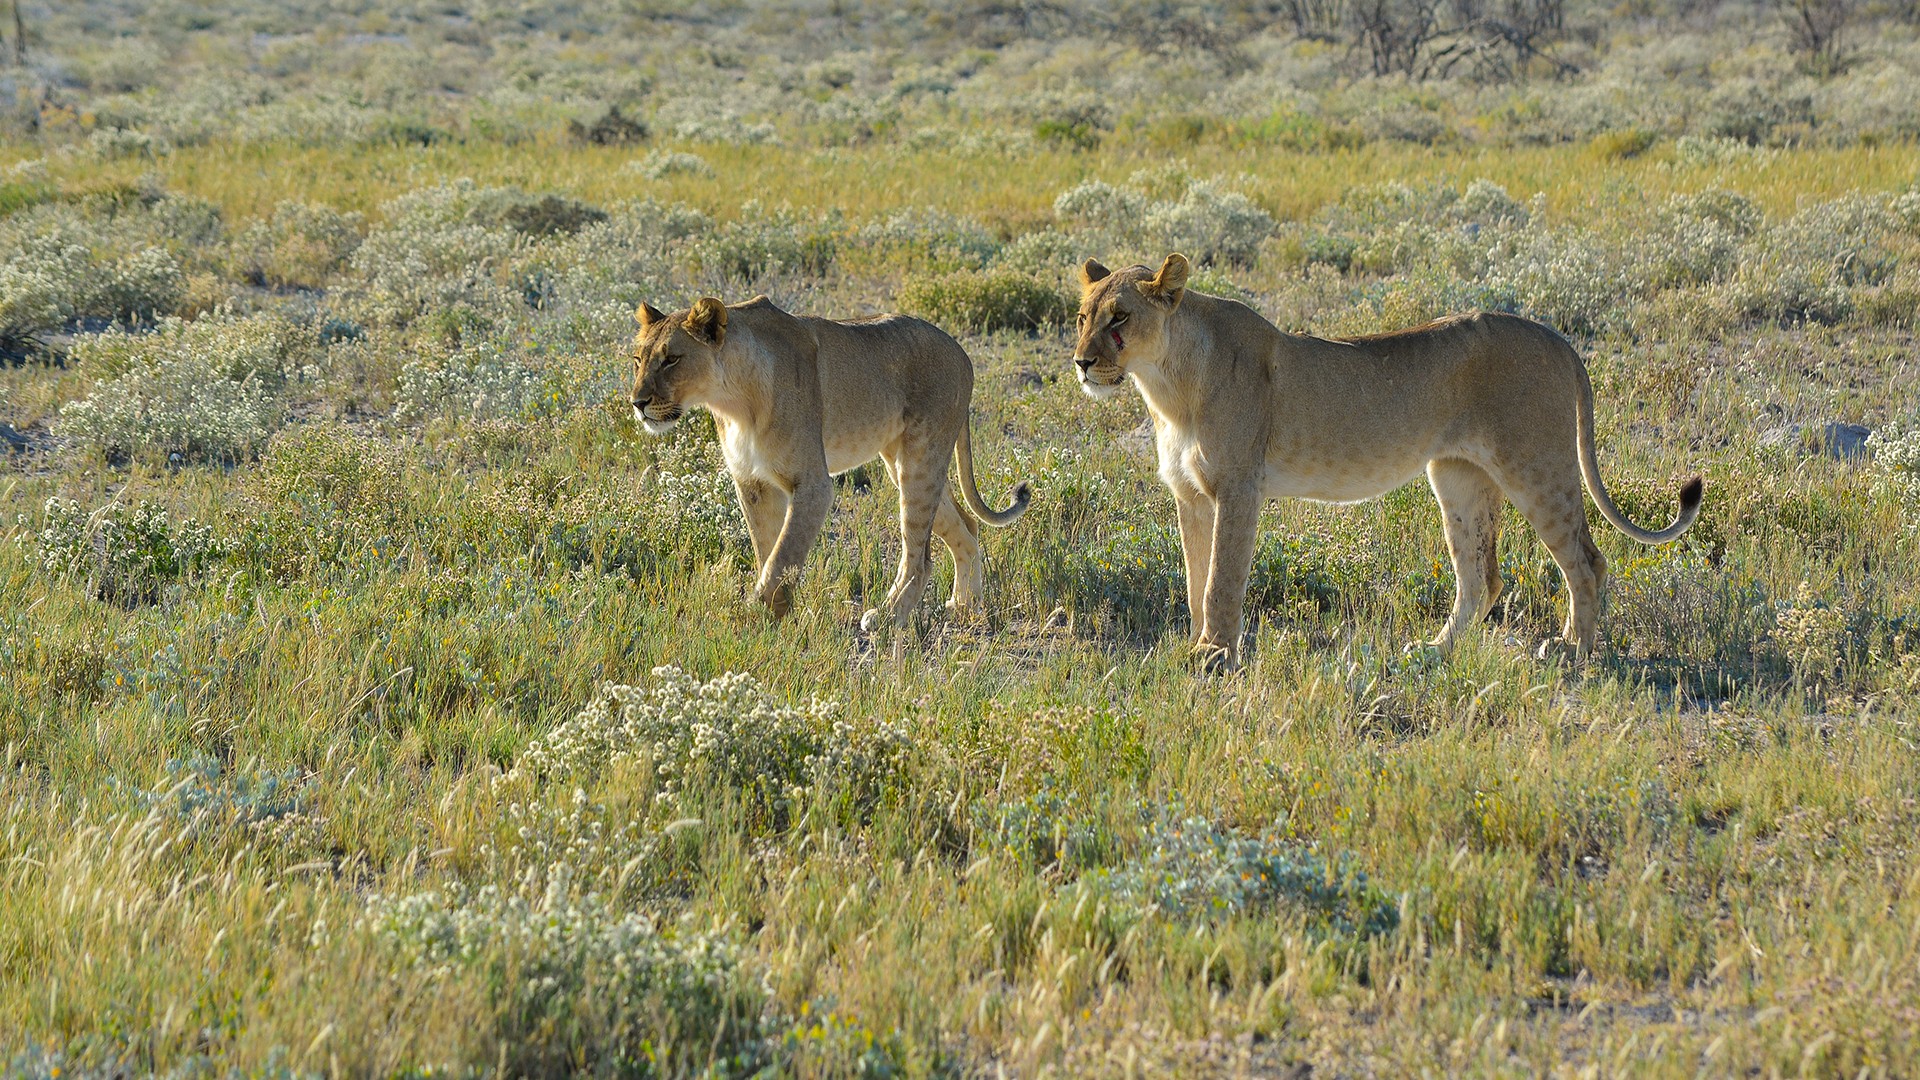 General 1920x1080 Namibia lion animals savannah nature wildlife Africa big cats mammals